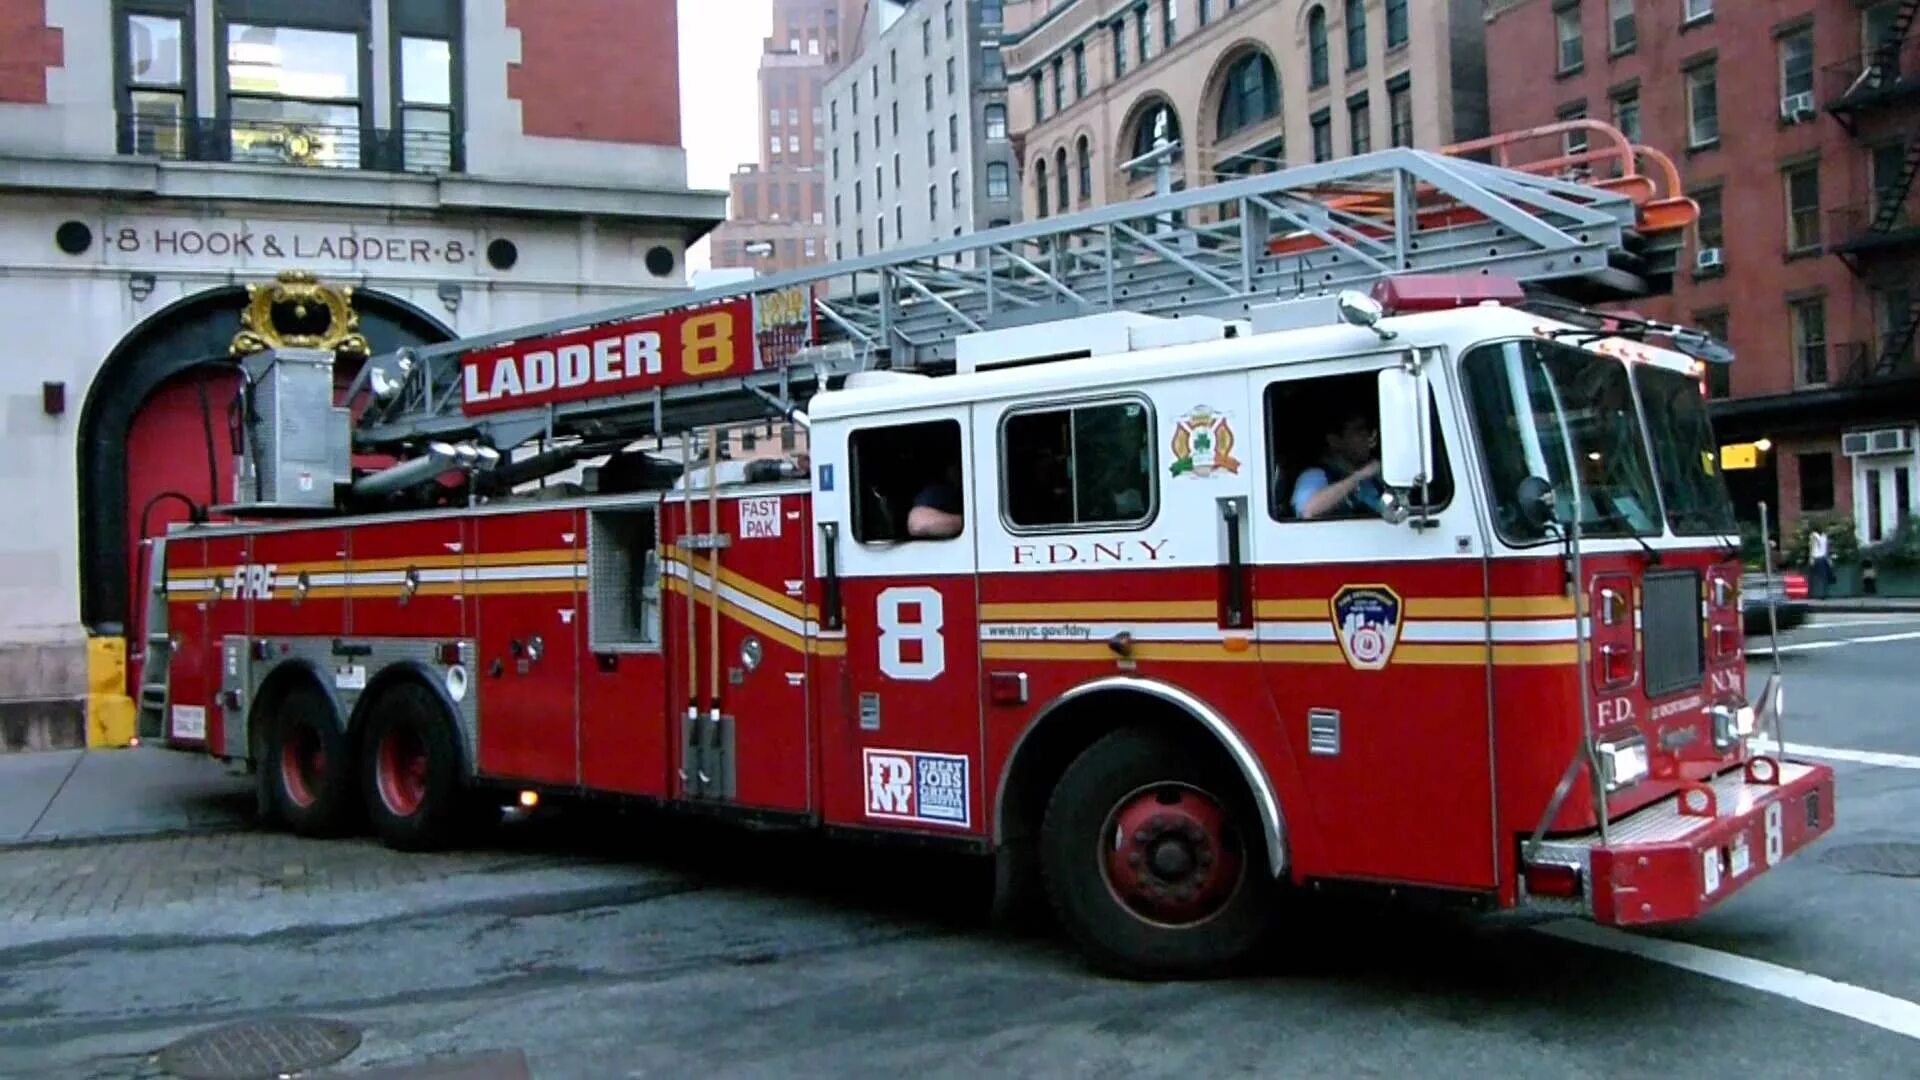 Ар пожарный автомобиль. Пожарные машины Fire Ladder Truck. Fire engine FDNY. Пожарная машина Форд ц 8000. FDNY Trucks лестница.